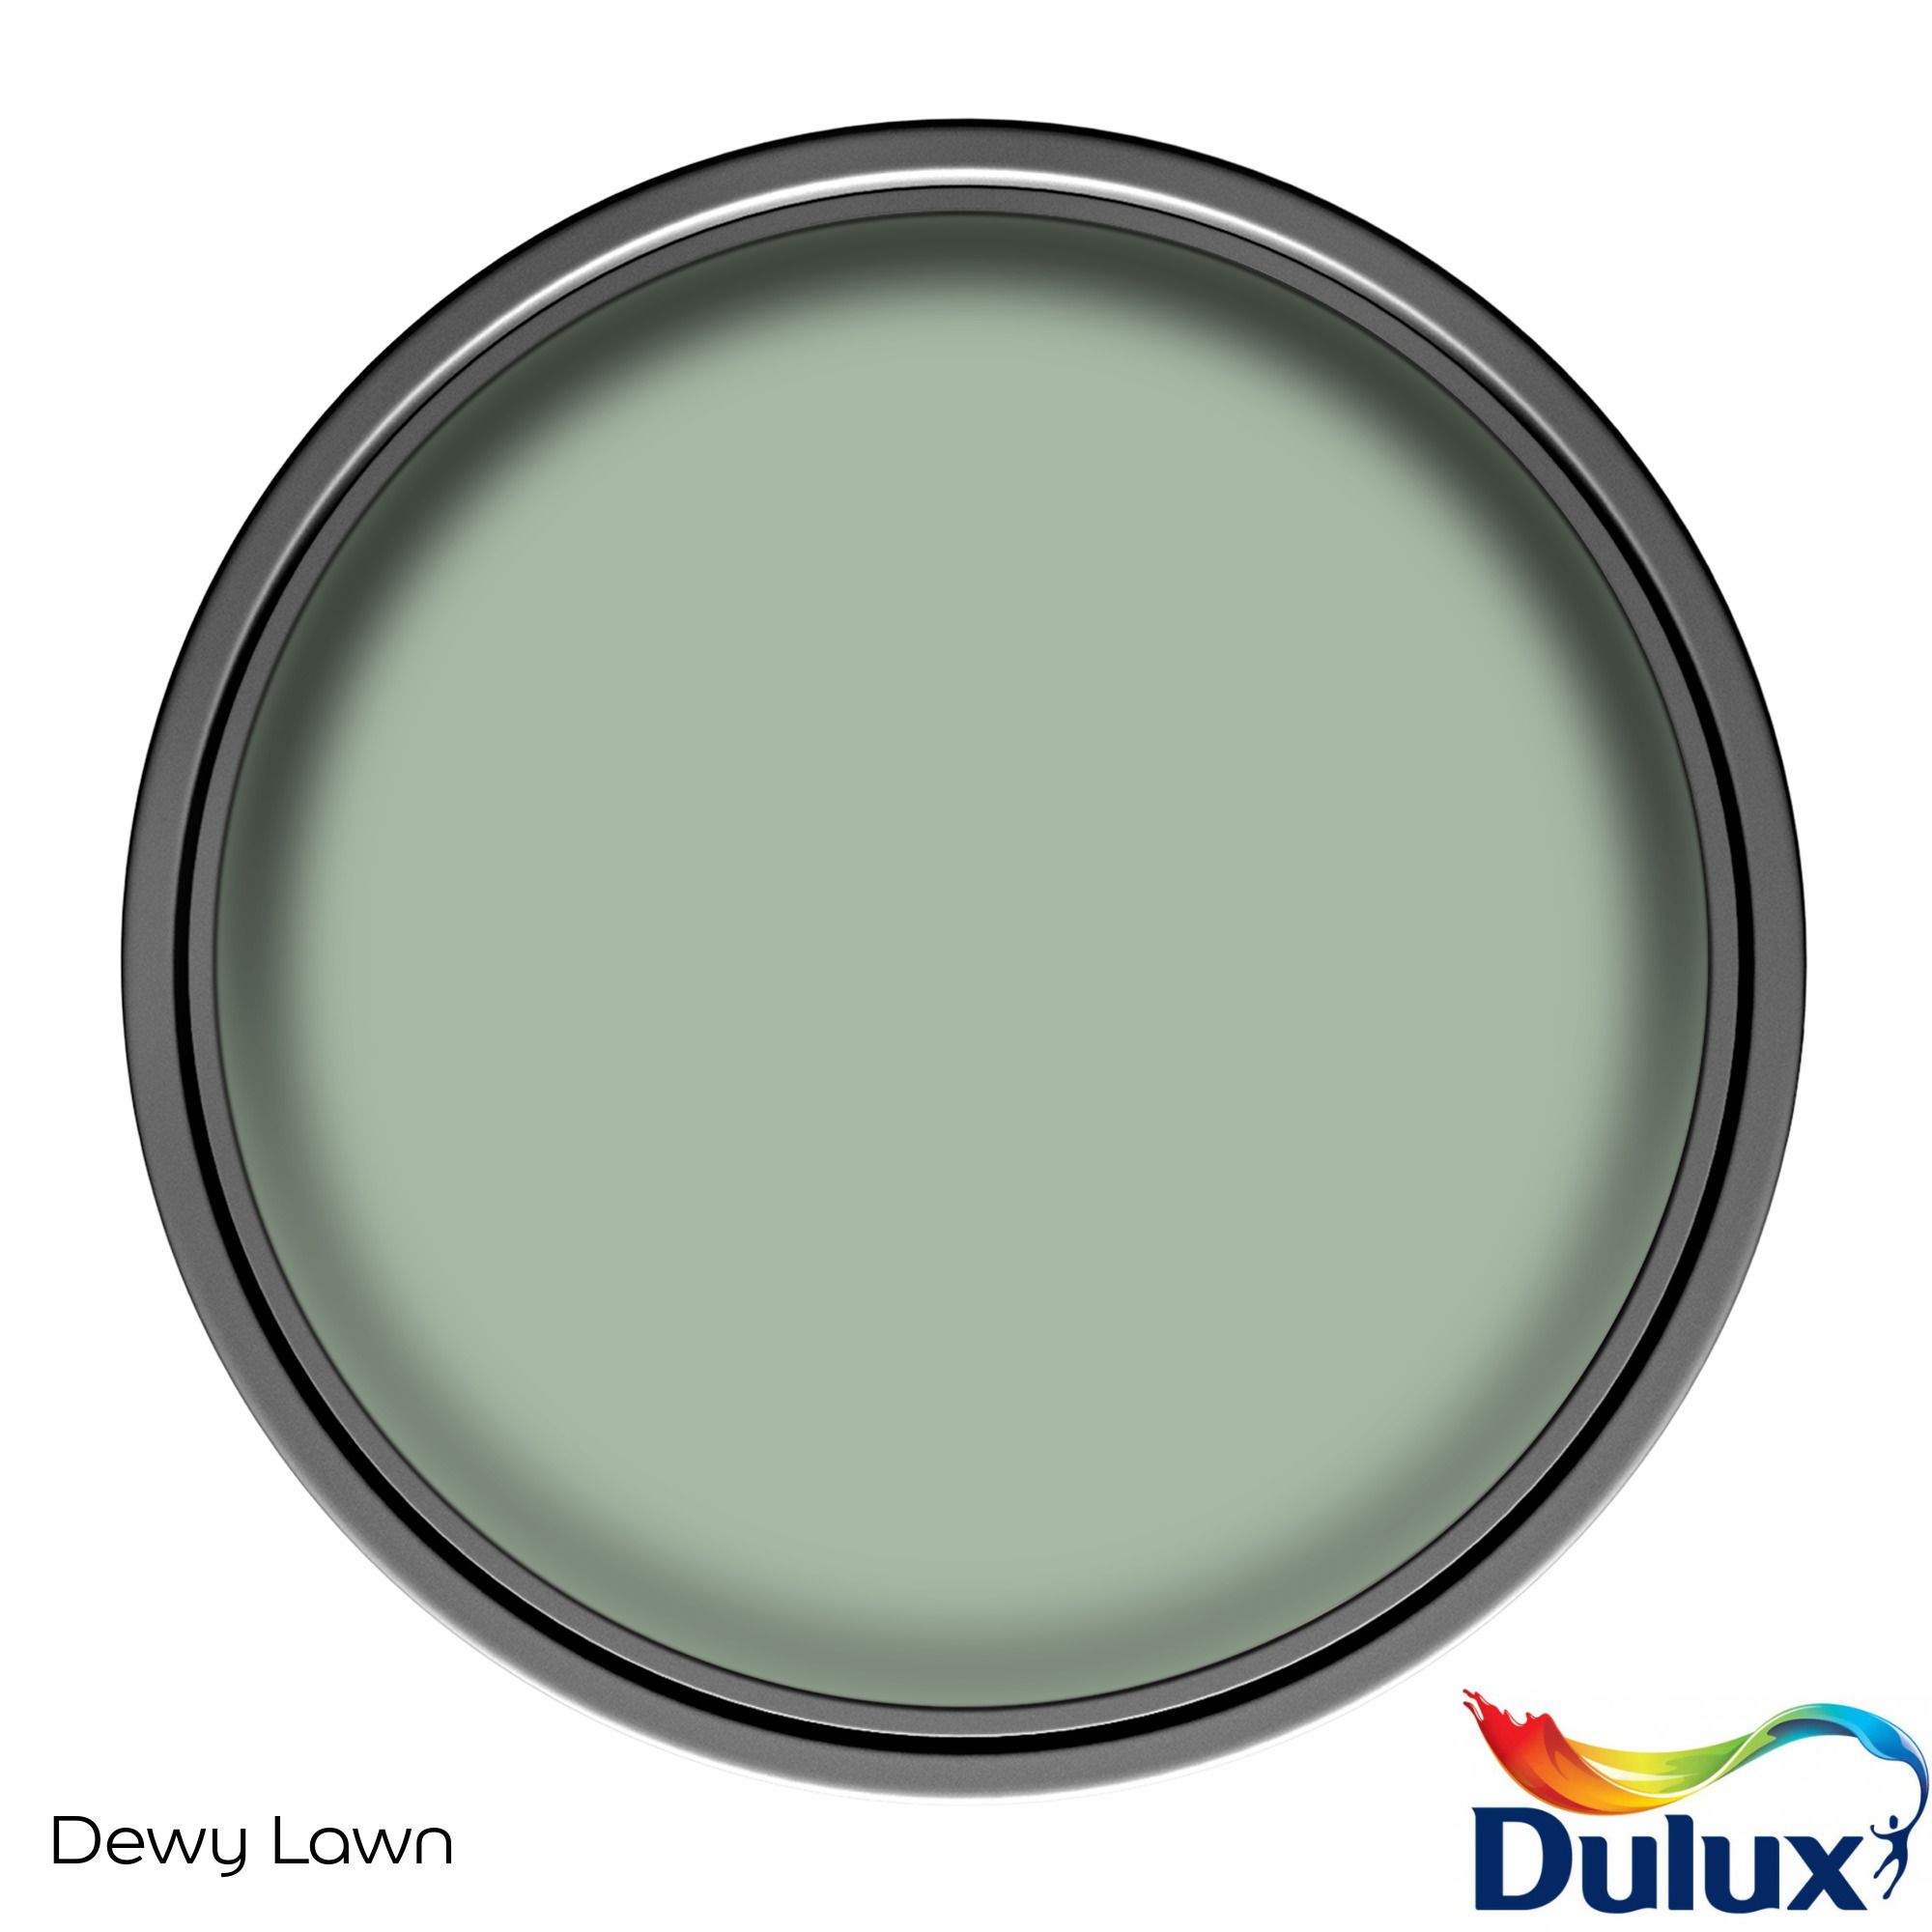 Dulux Easycare Bathroom Dewy Lawn Soft sheen Wall paint, 30ml